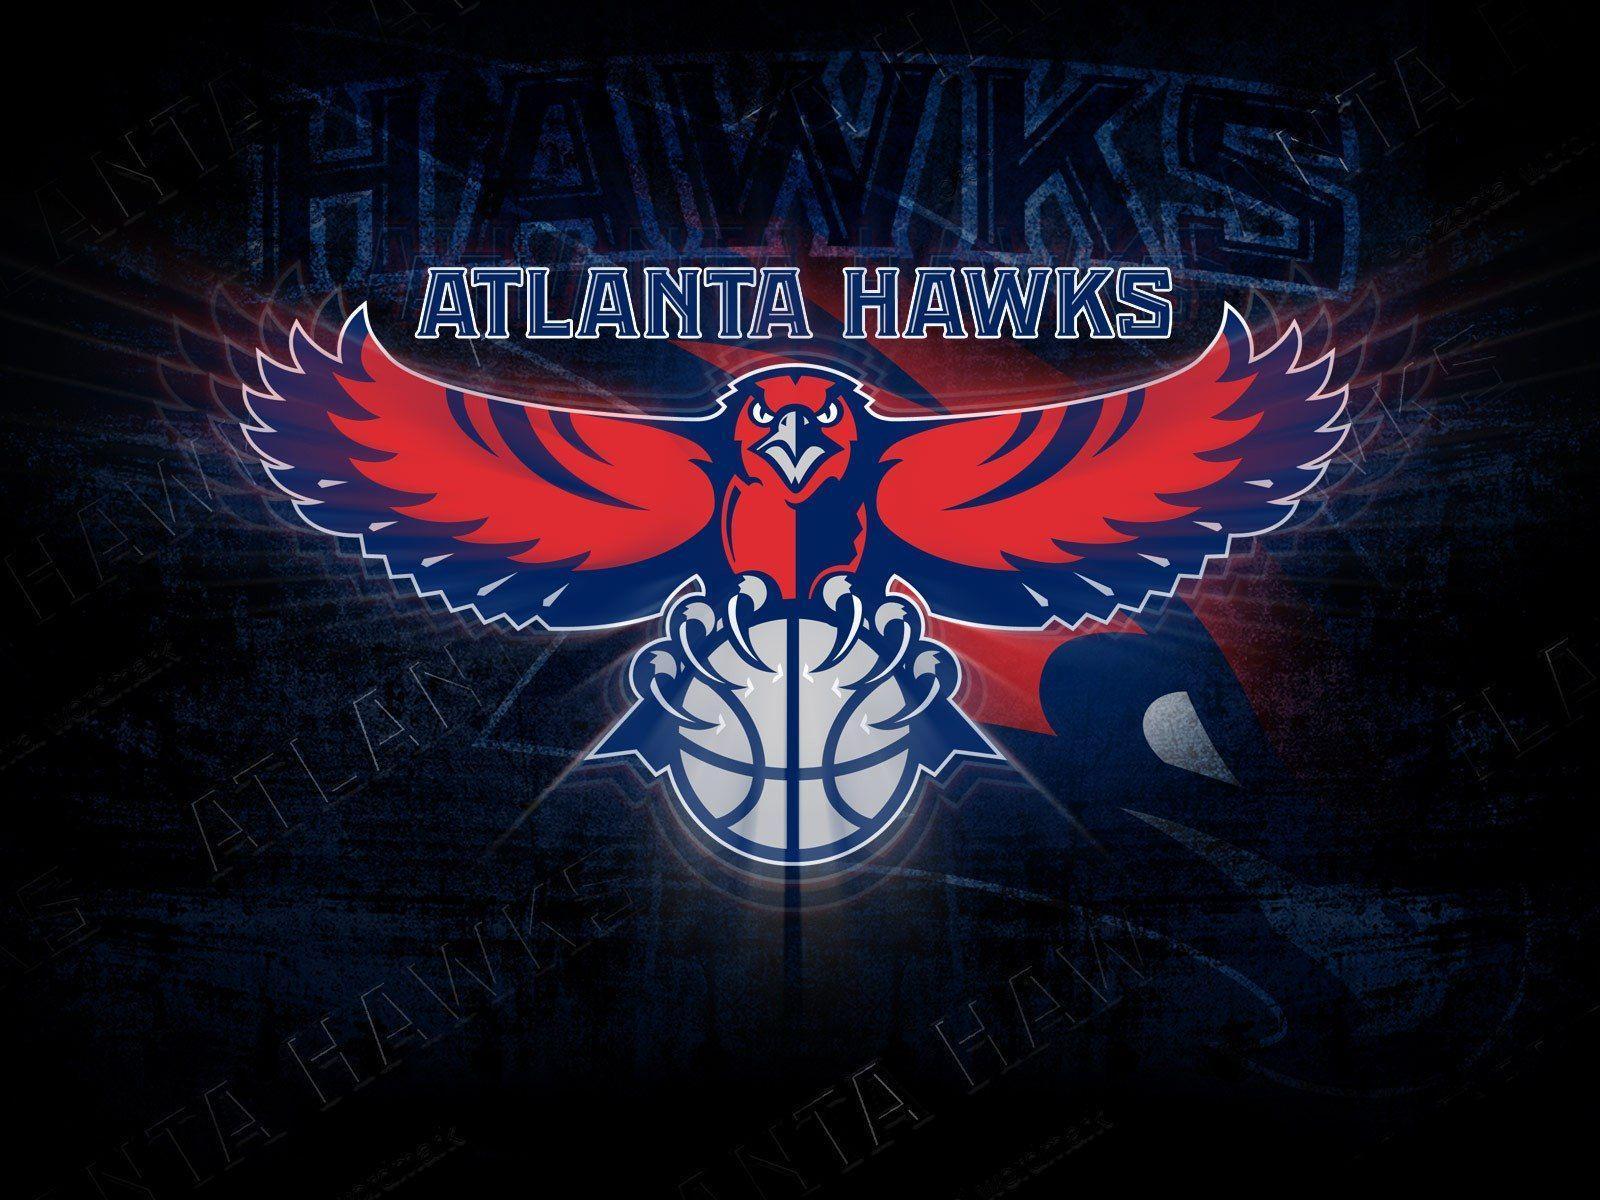 Atlanta Hawks rumors